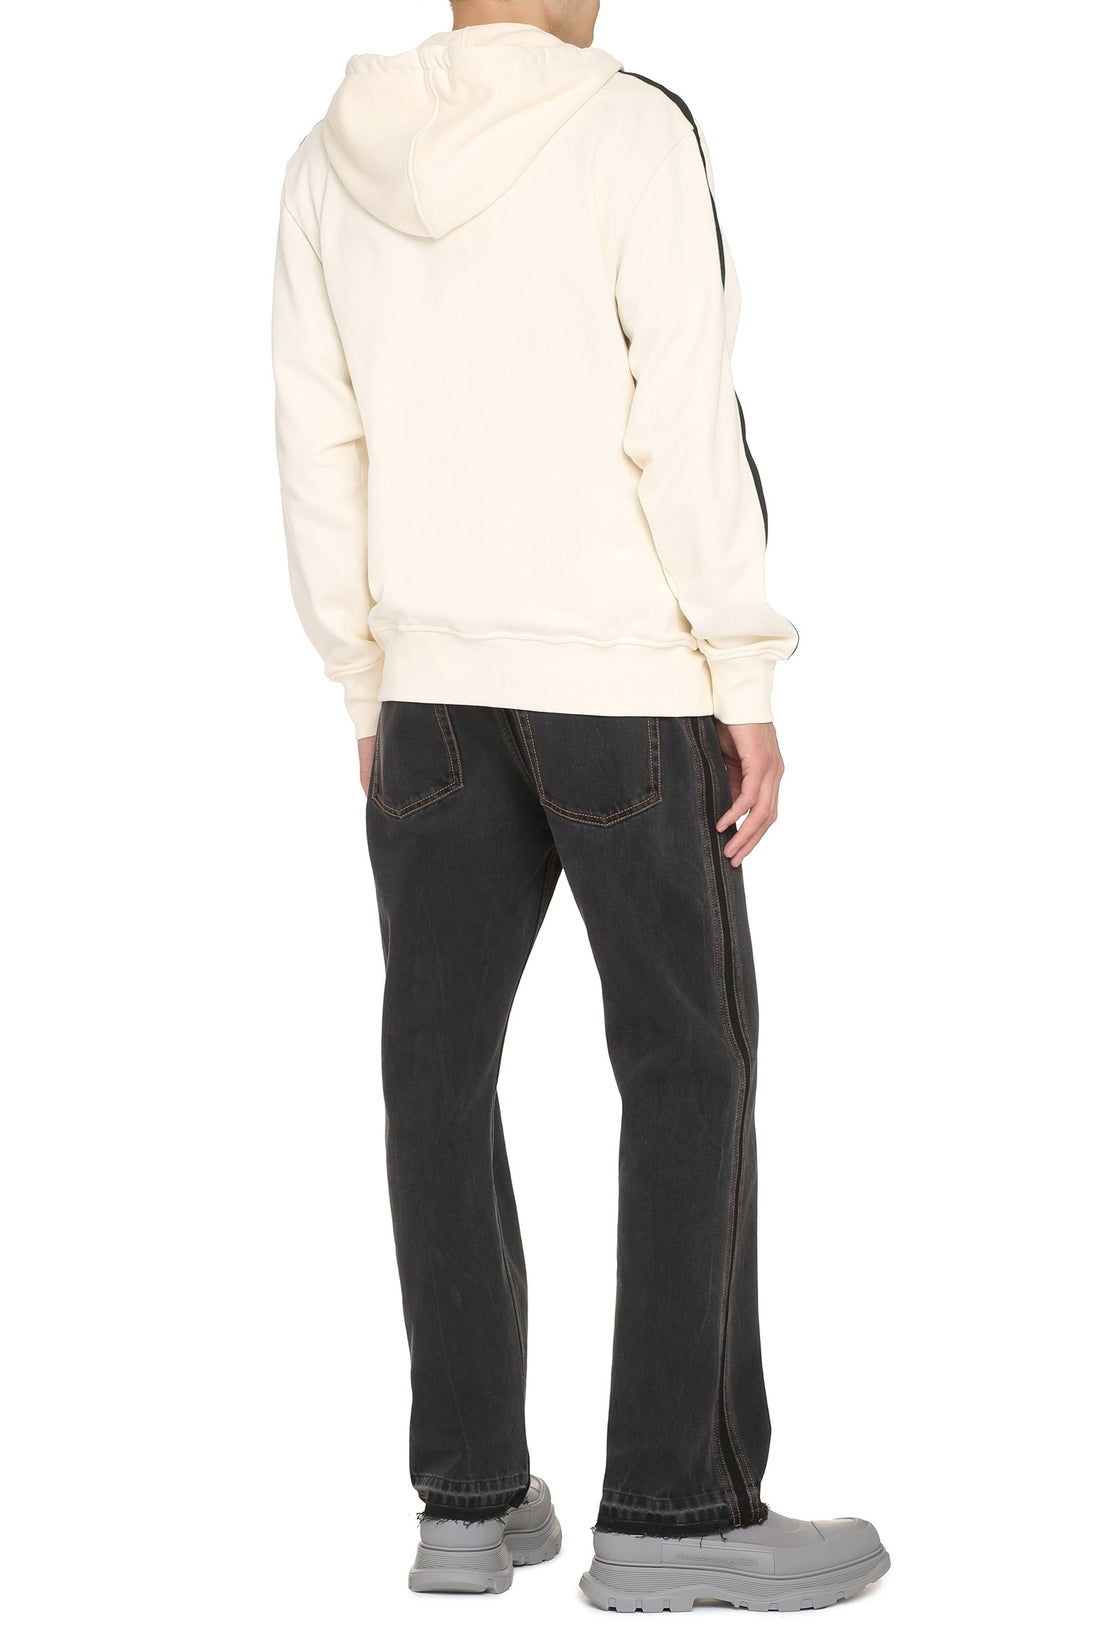 Alexander McQueen-OUTLET-SALE-Cotton full zip hoodie-ARCHIVIST